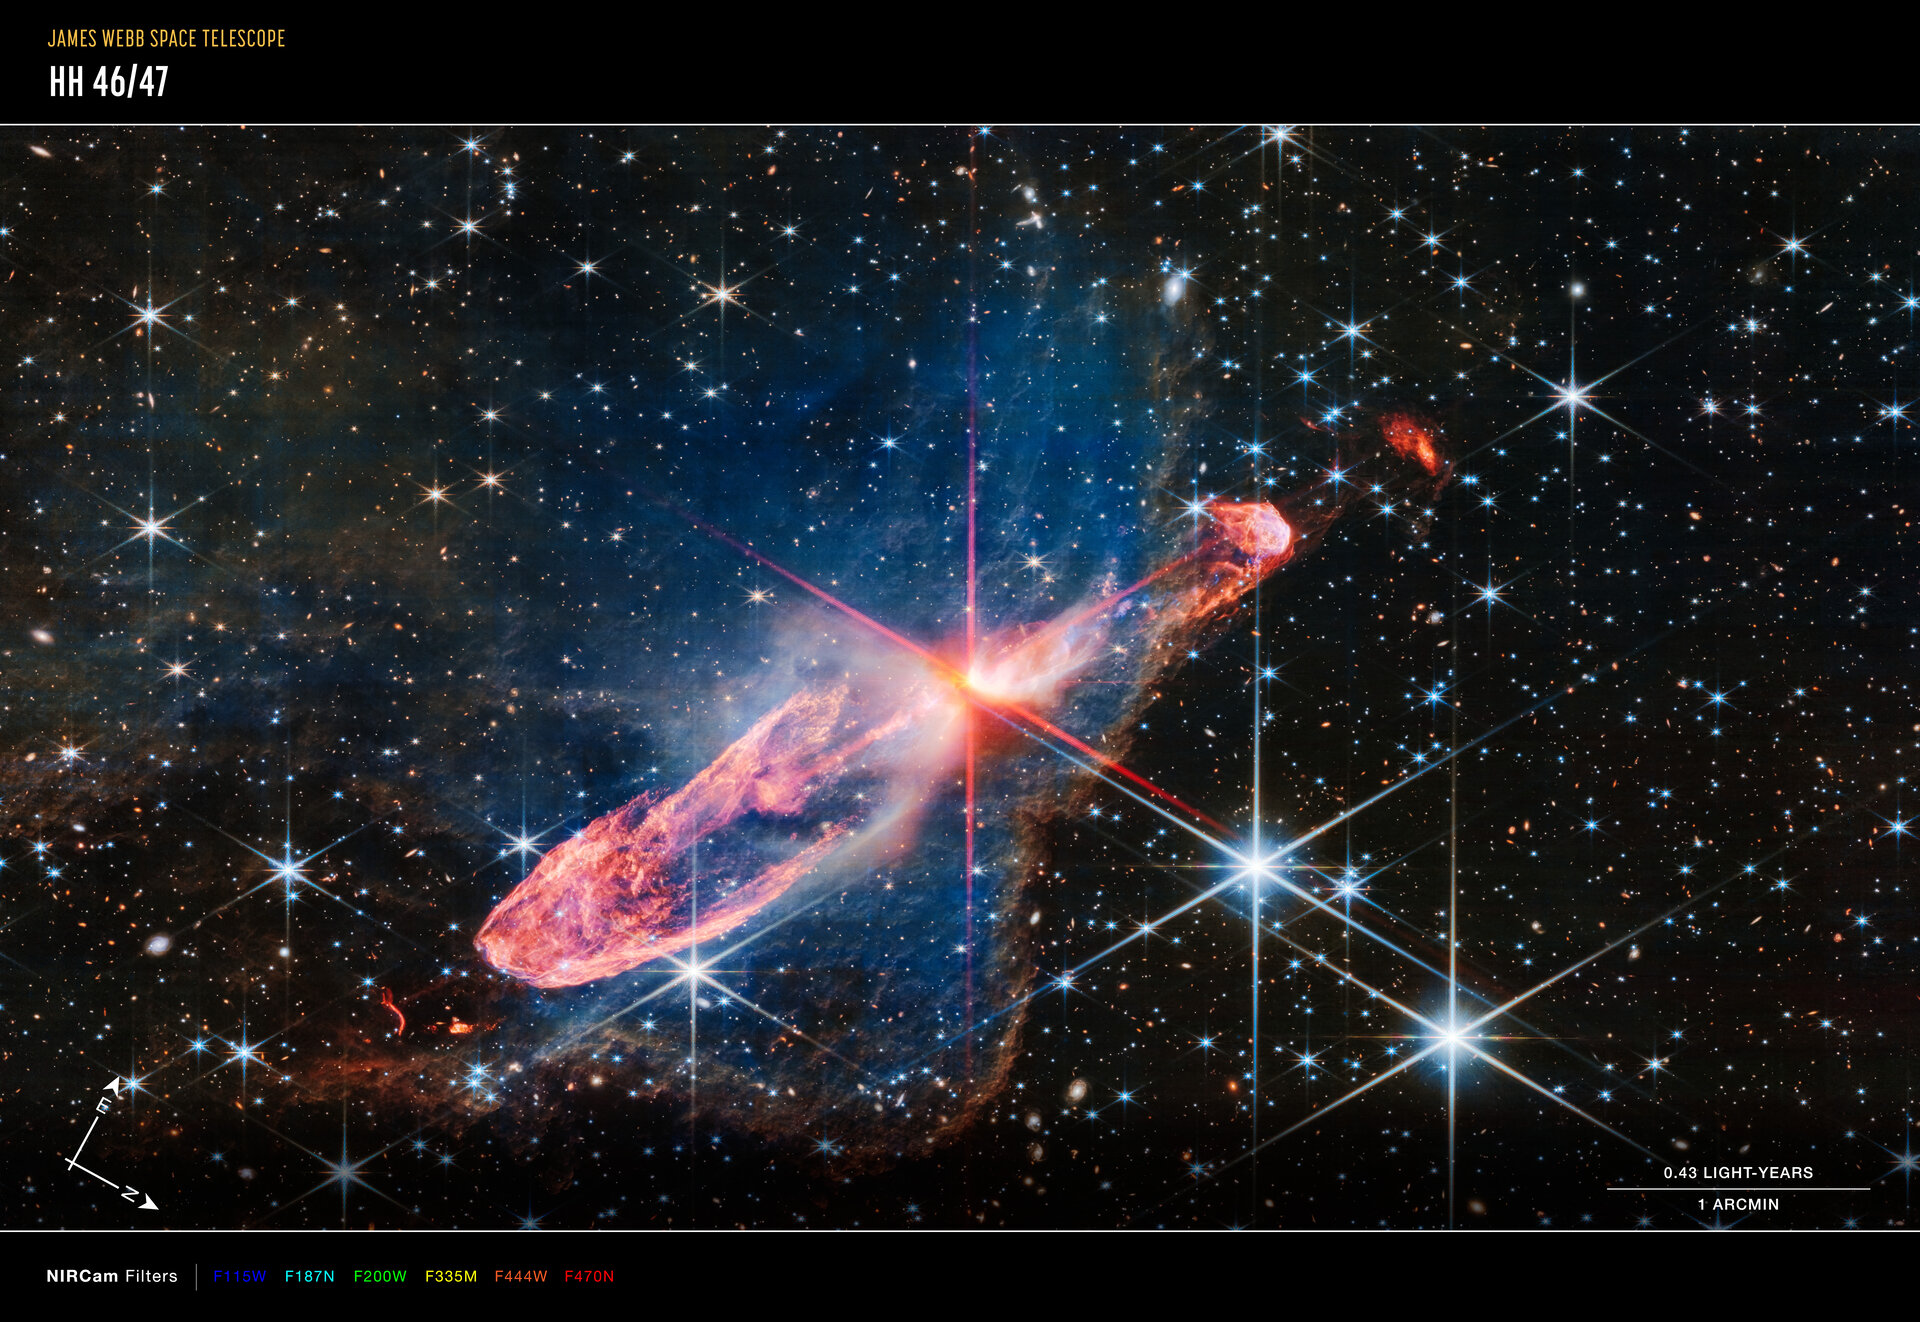 Herbig-Haro 46/47 (imagen NIRCam – anotada). Crédito: NASA, ESA, CSA, J. DePasquale (STScI)